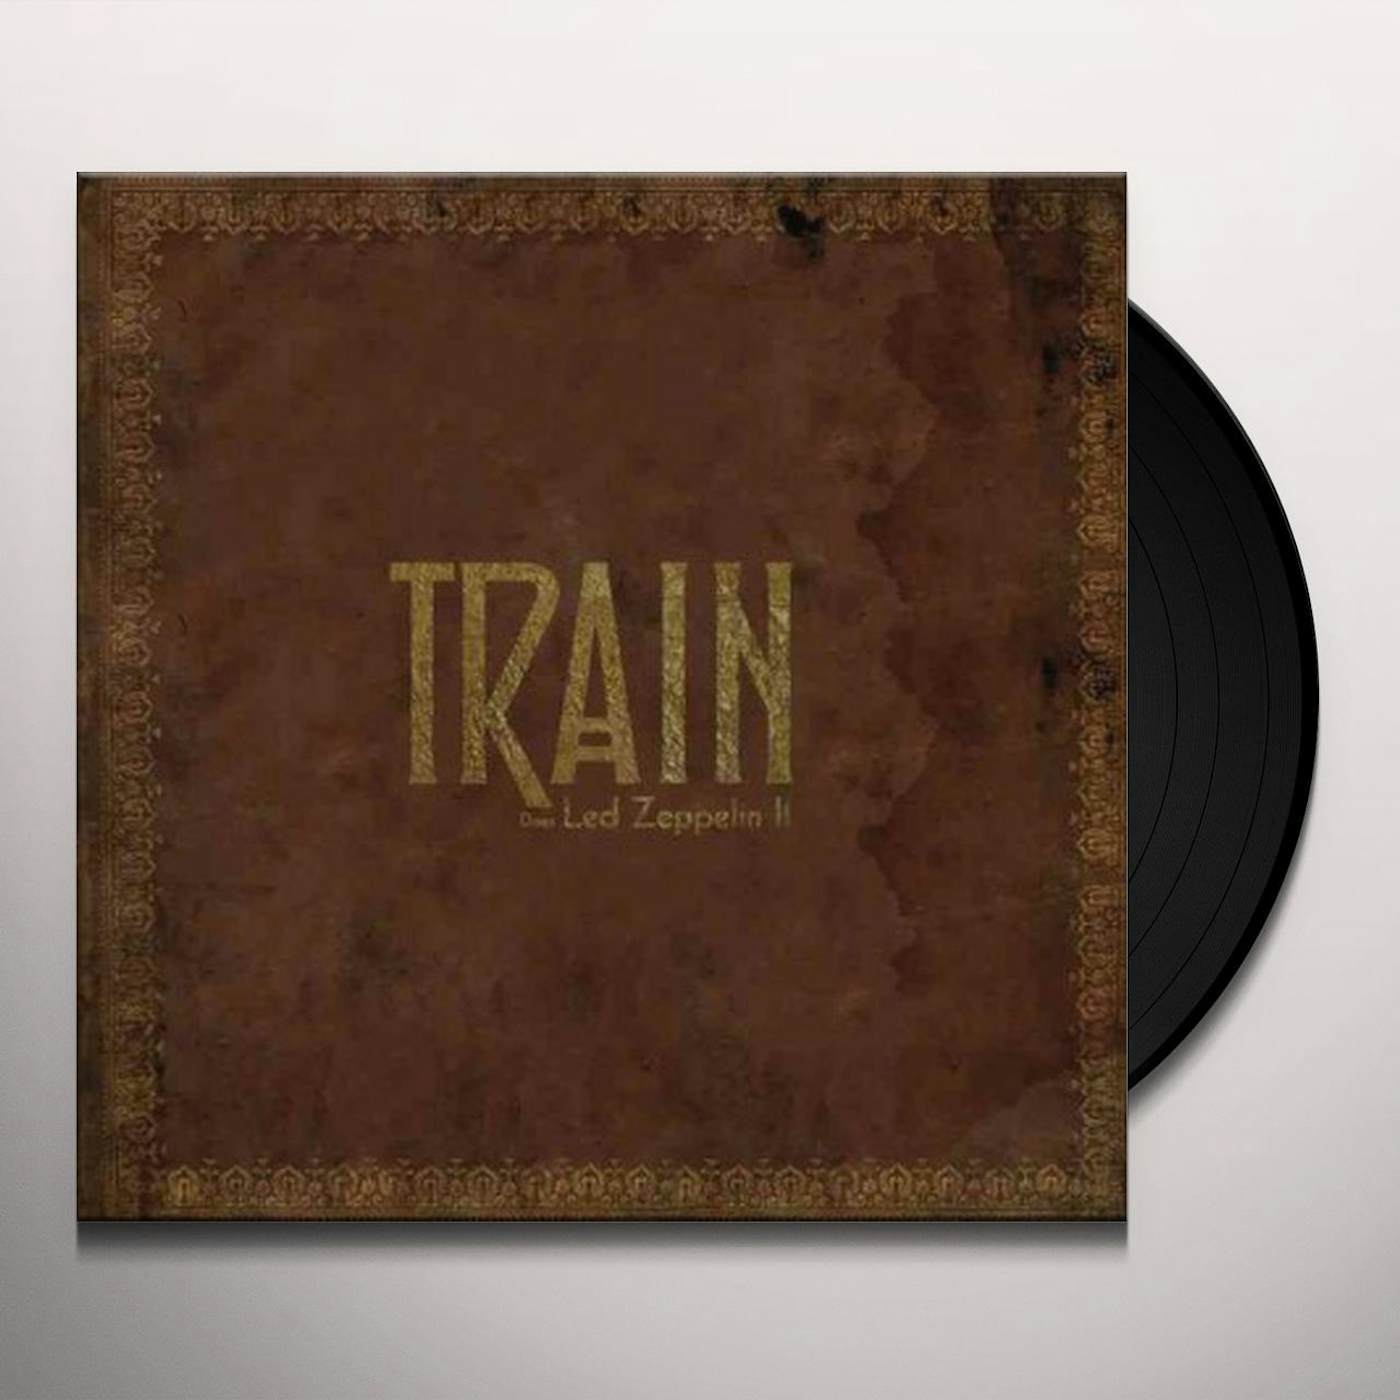 Train Does Led Zeppelin II Vinyl Record